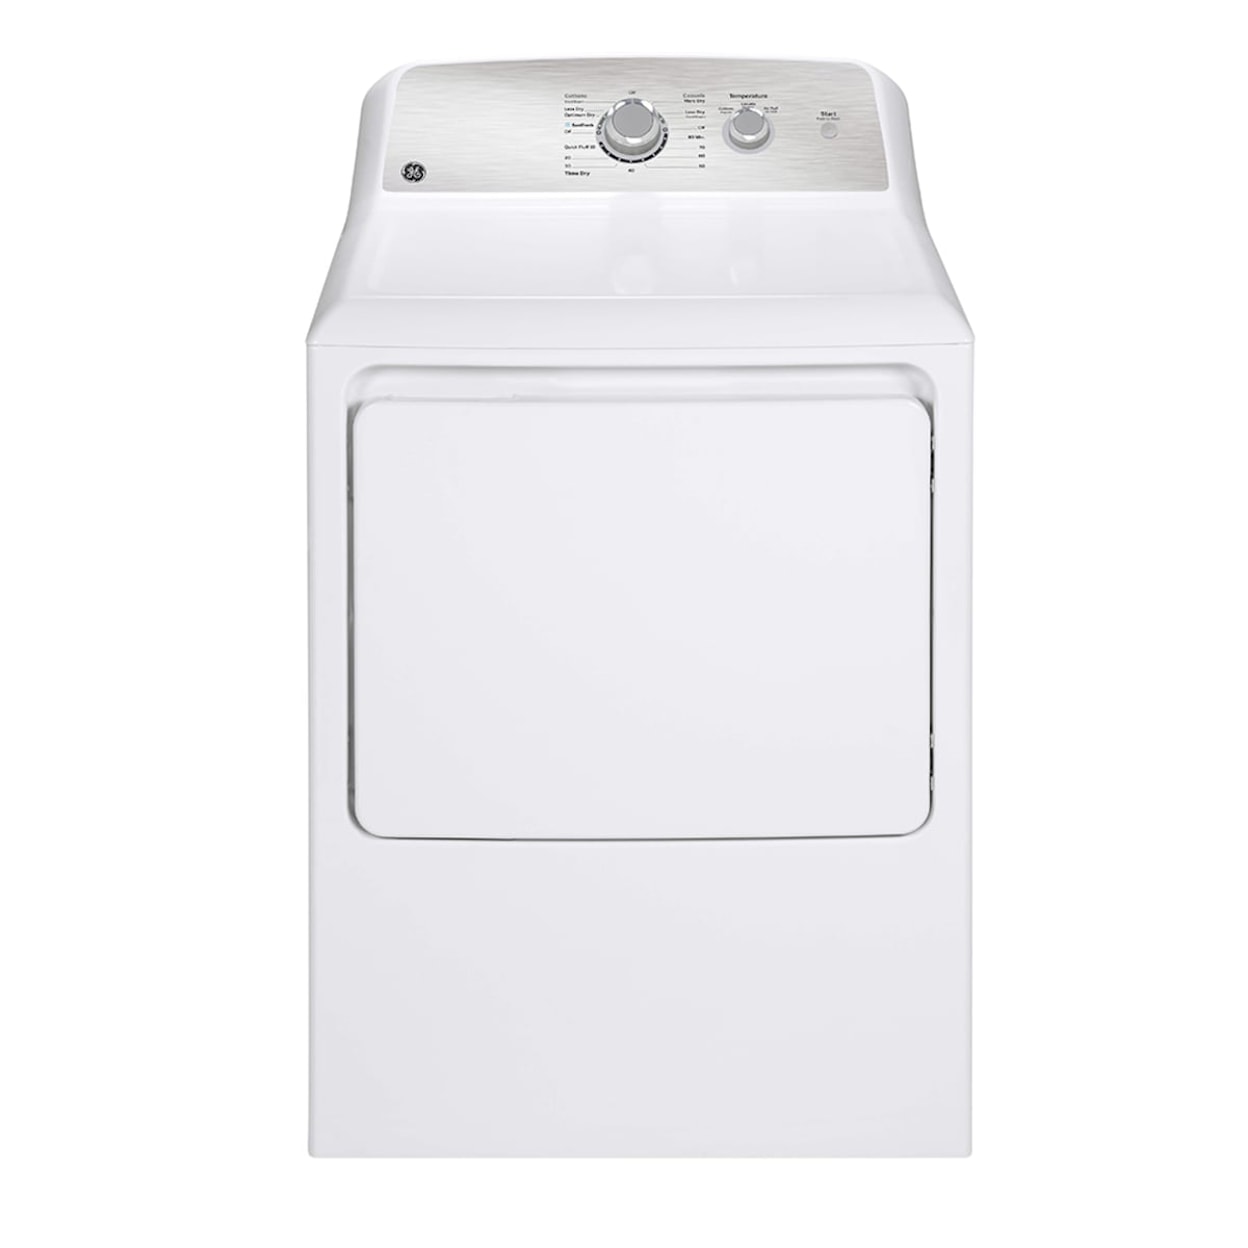 GE Appliances GE Appliances Top Load Electric Dryer